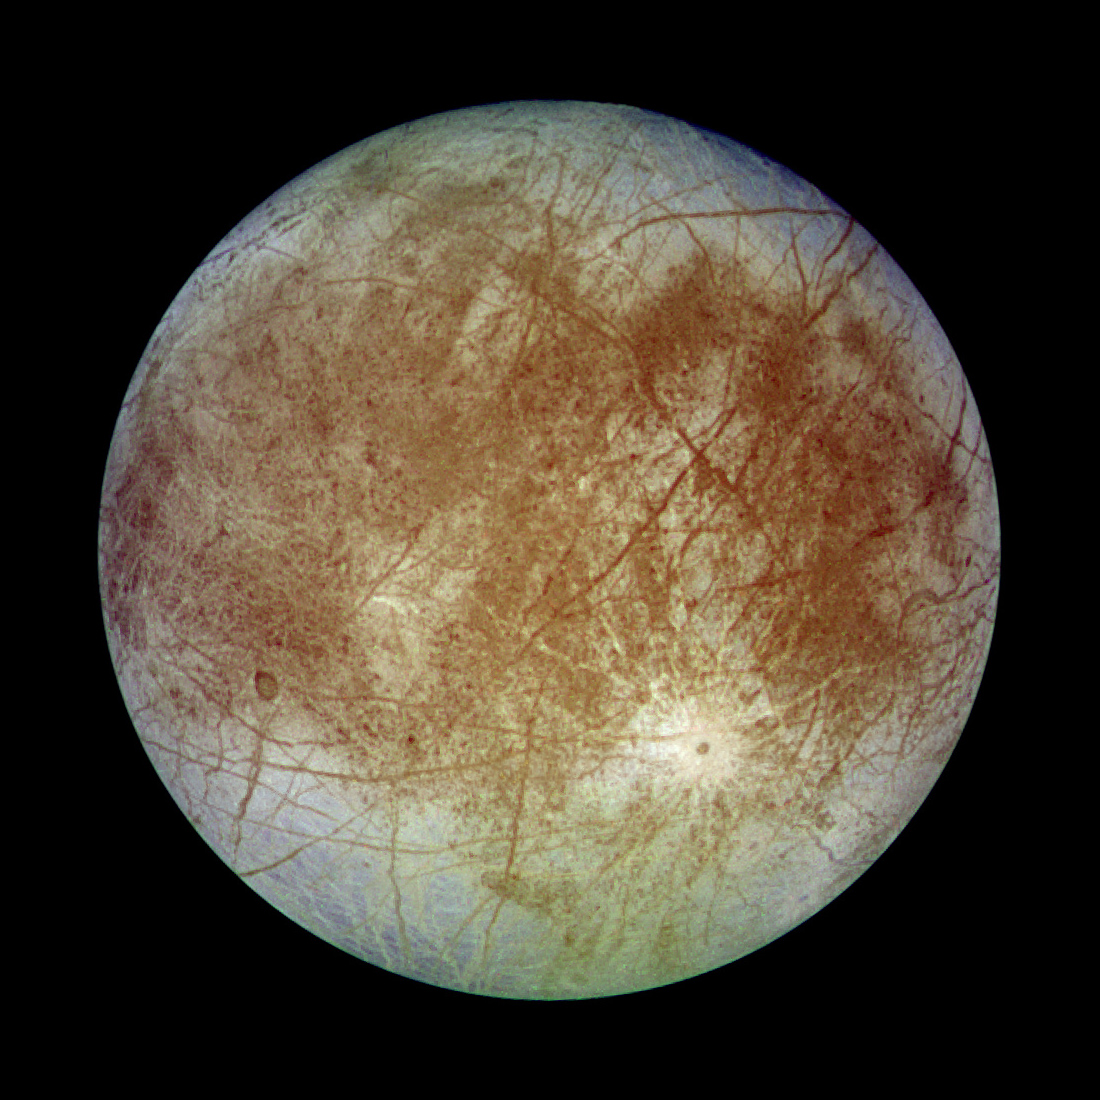 upload.wikimedia.org_wikipedia_commons_e_e4_europa-moon-with-margins.jpg